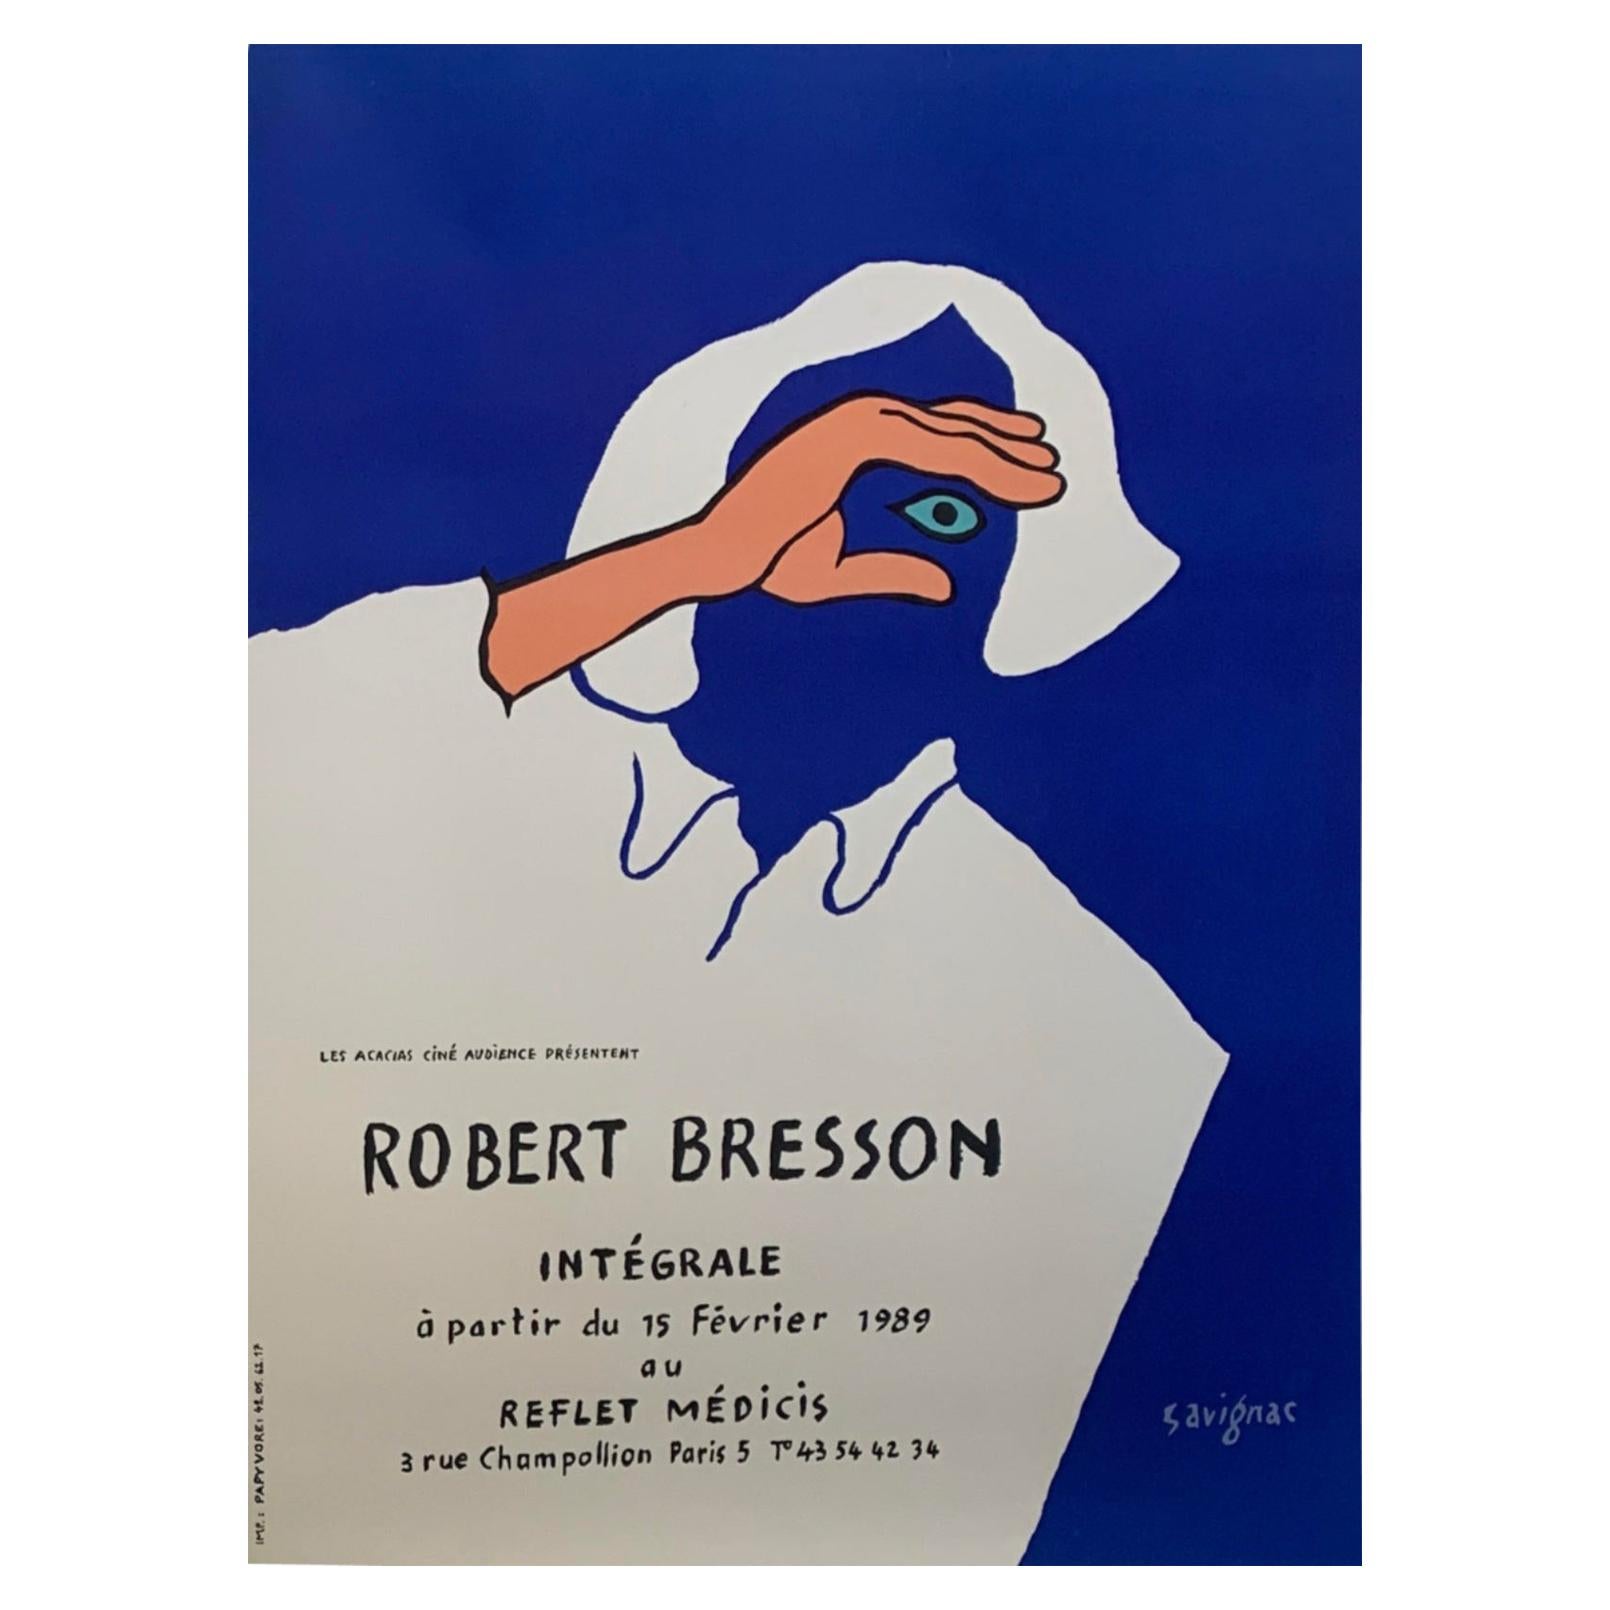 Original Vintage Poster of Robert Bresson French Film Director by Savignac, 1989